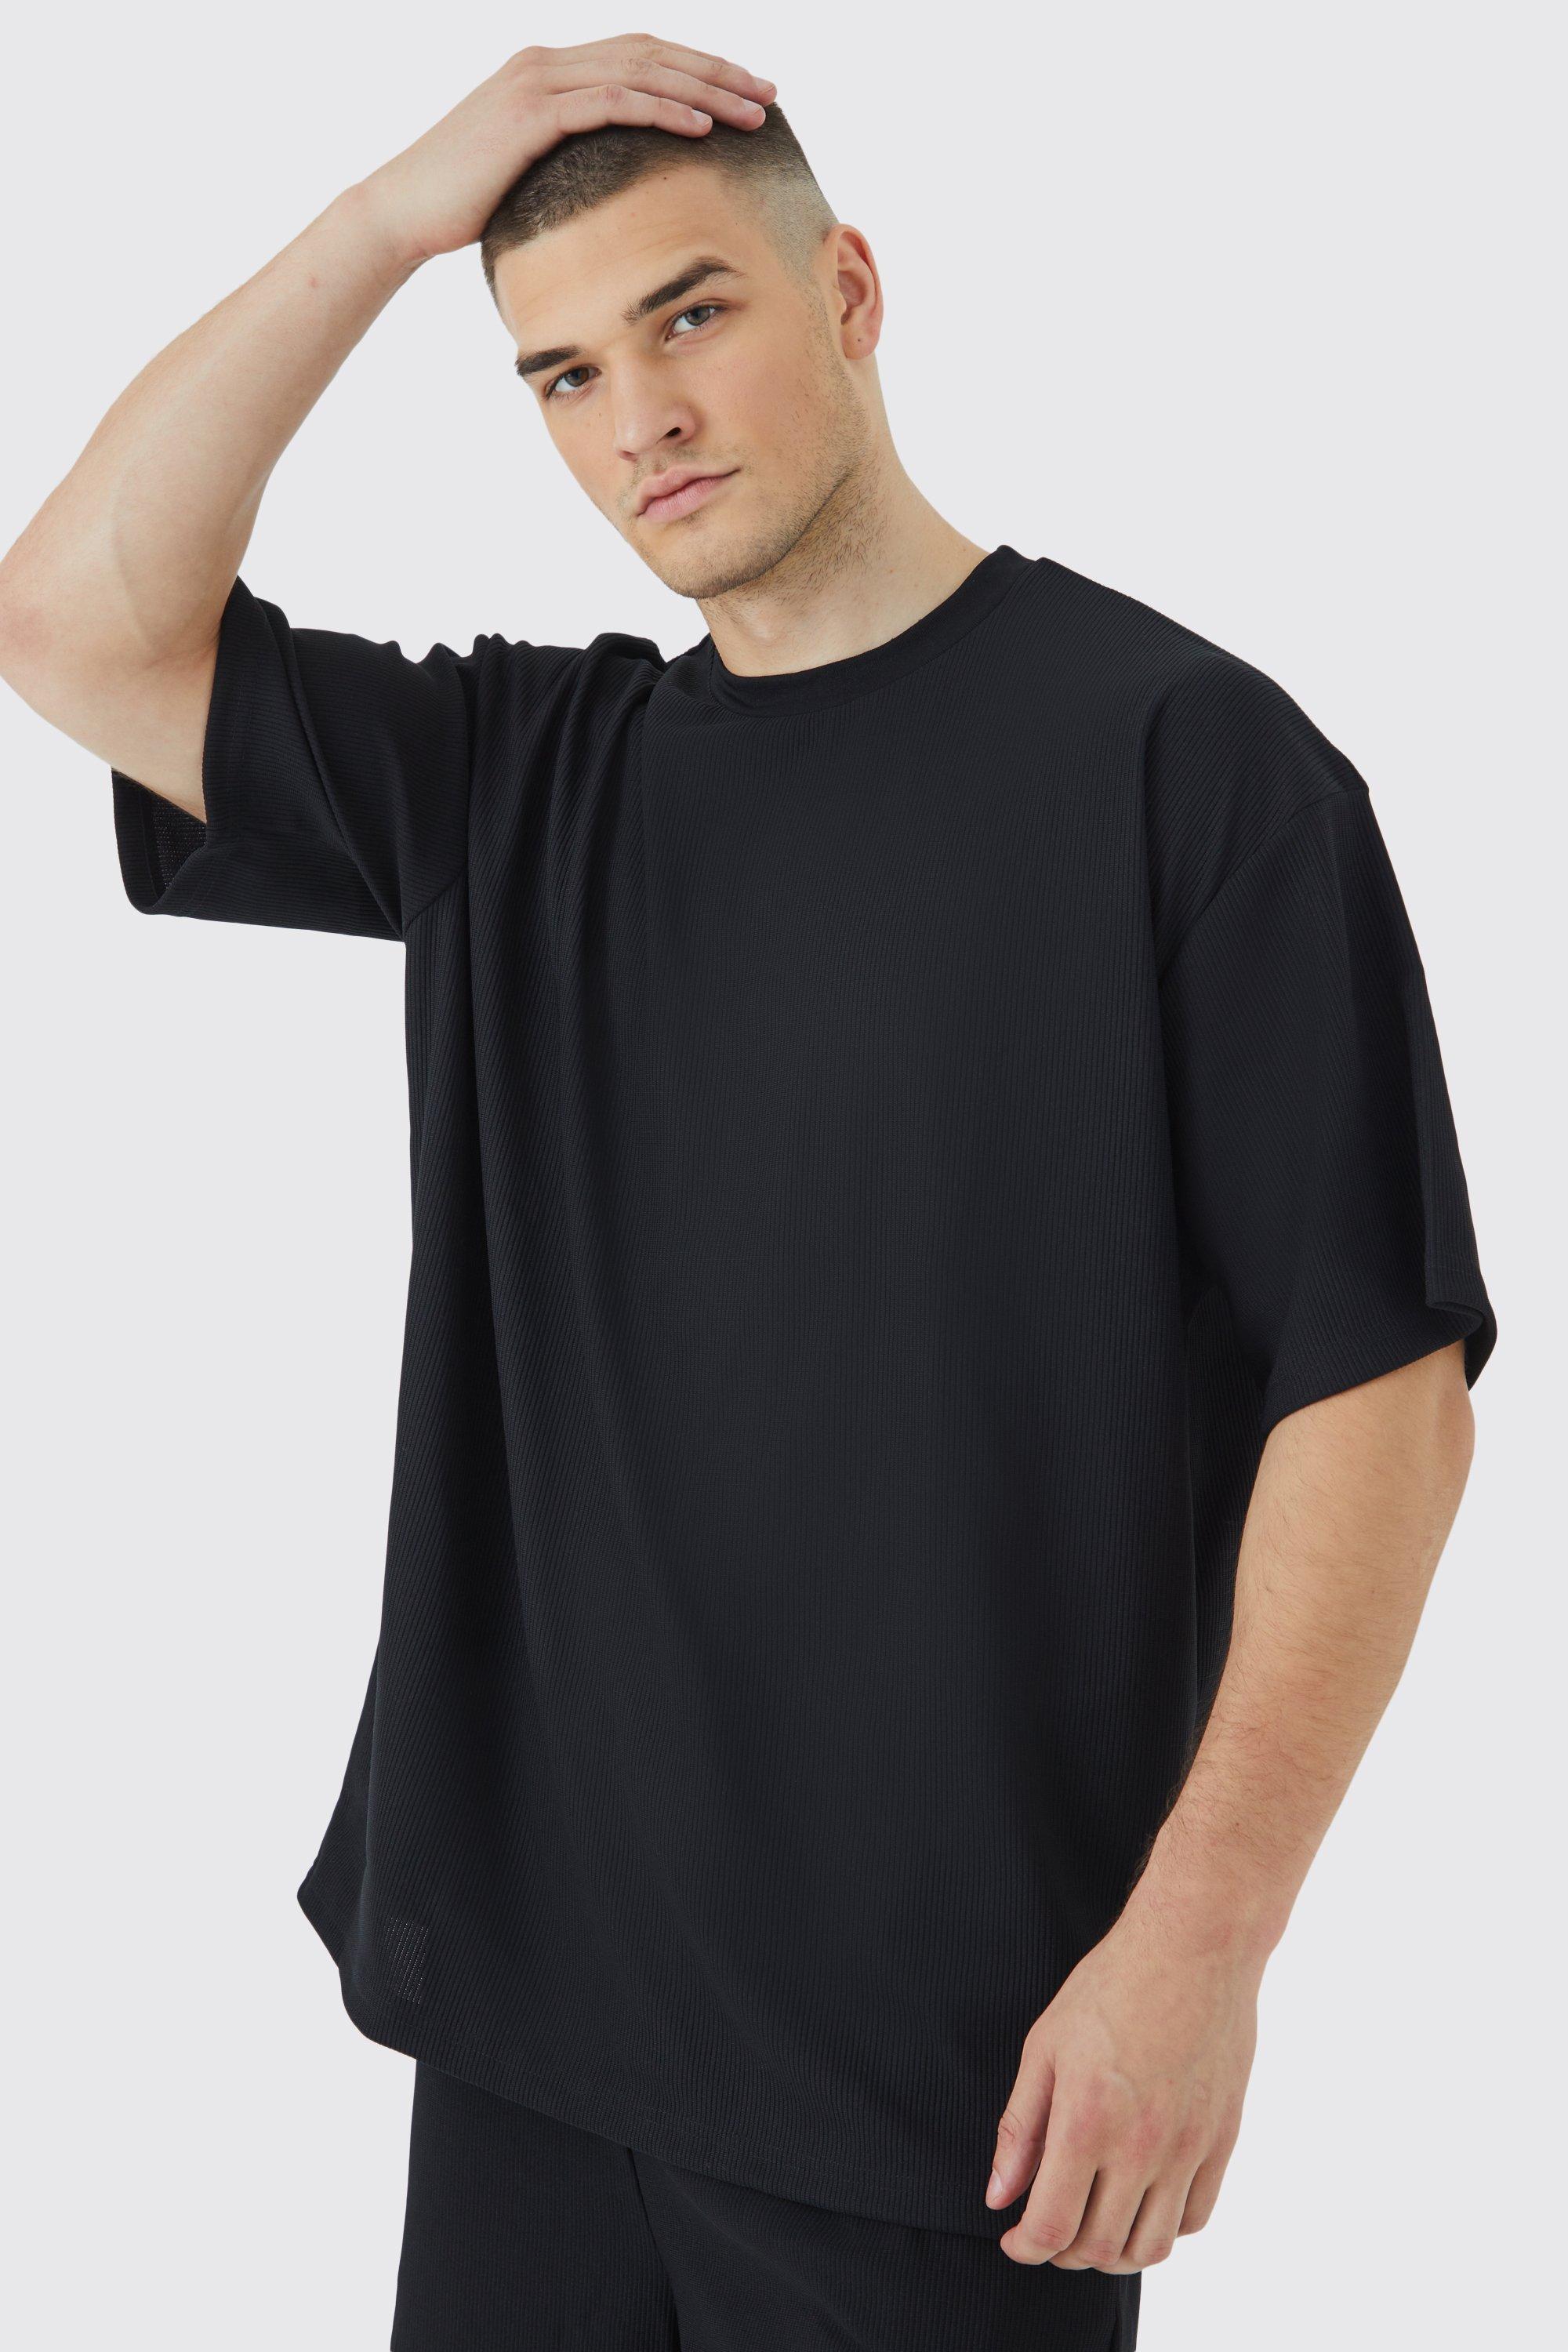 black rib oversized men's t-shirt